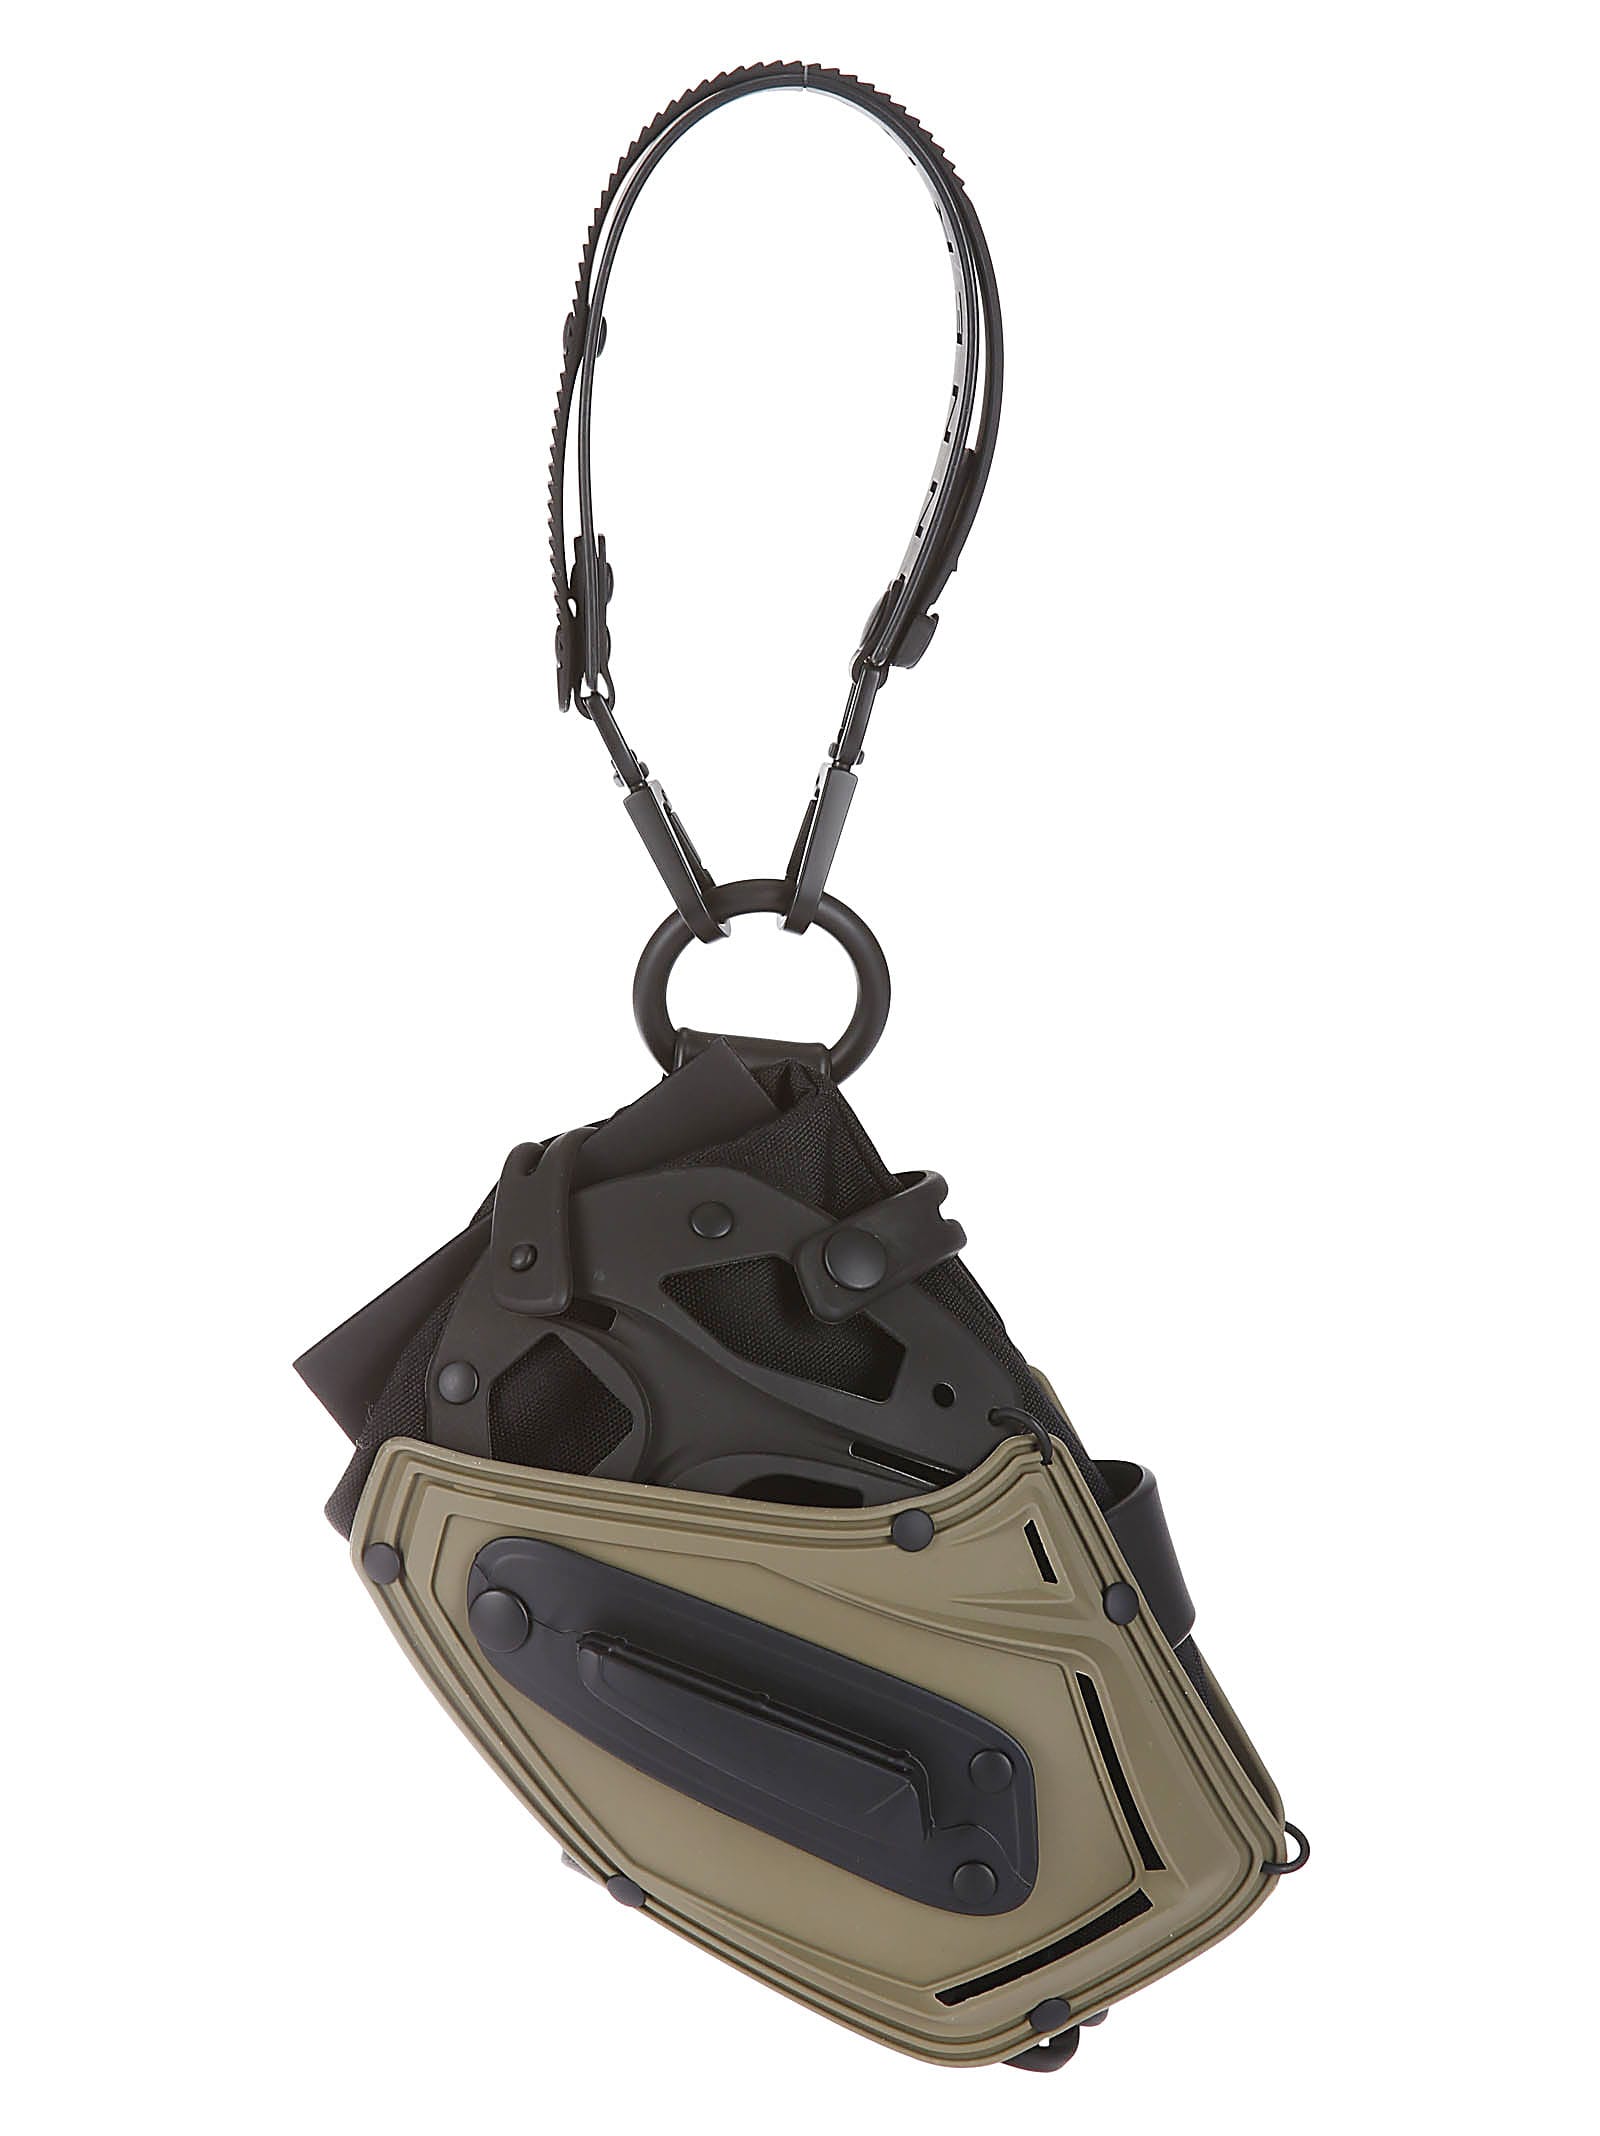 Innerraum Object I51 Wristlet Phone Bag